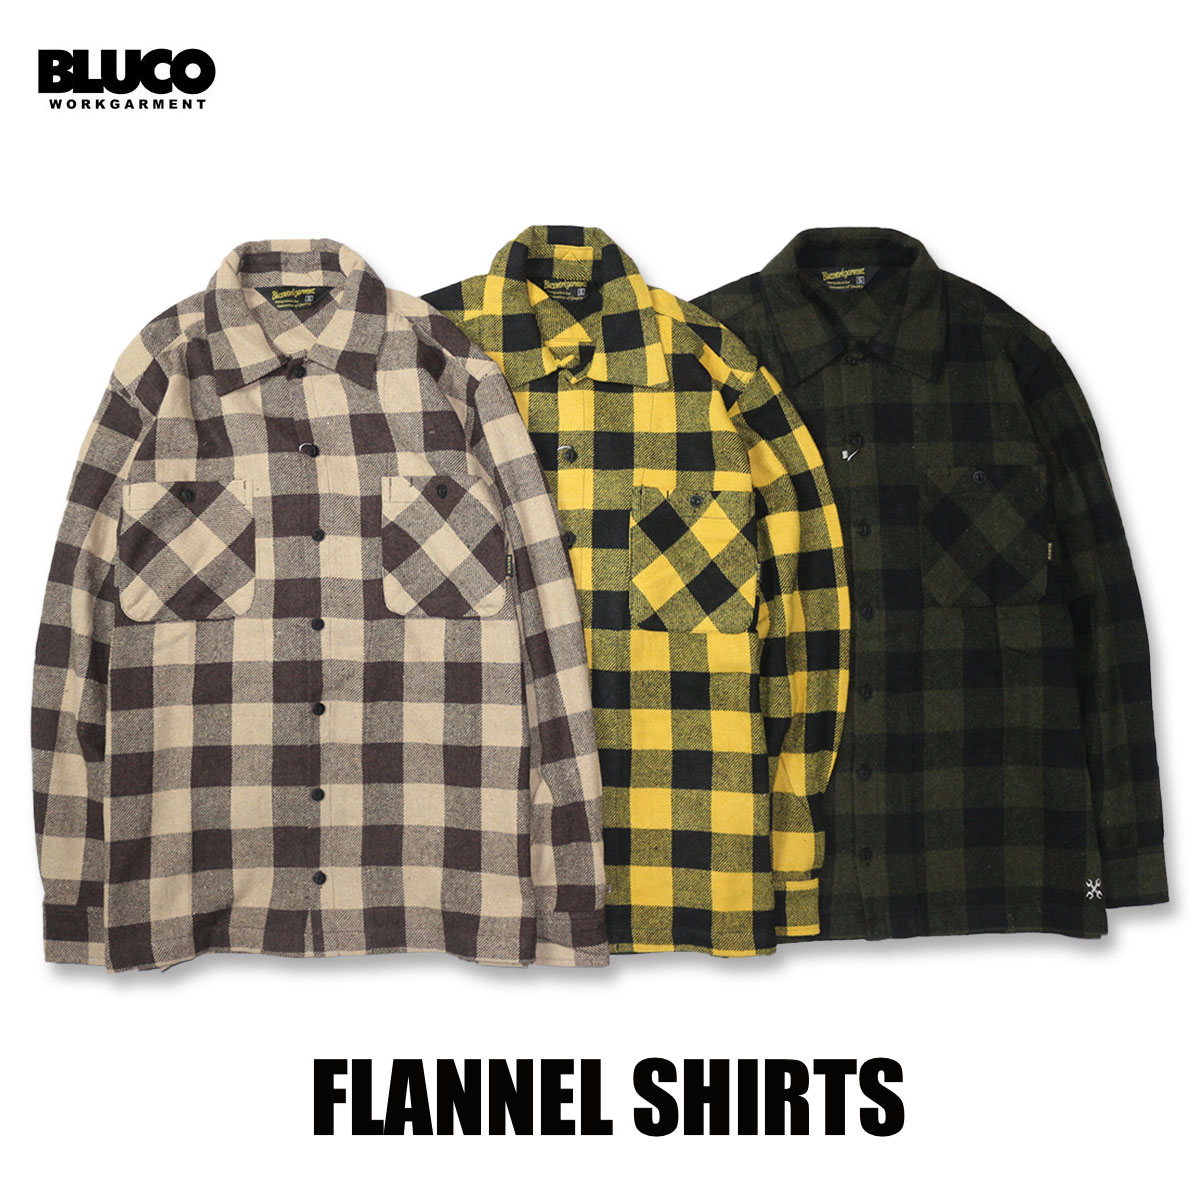 BLUCO(ブルコ) OL-048-022 FLANNEL SHIRTS 3色(BEG/OLV/YLW)☆送料無料☆ :048-022:Pins  store - 通販 - Yahoo!ショッピング